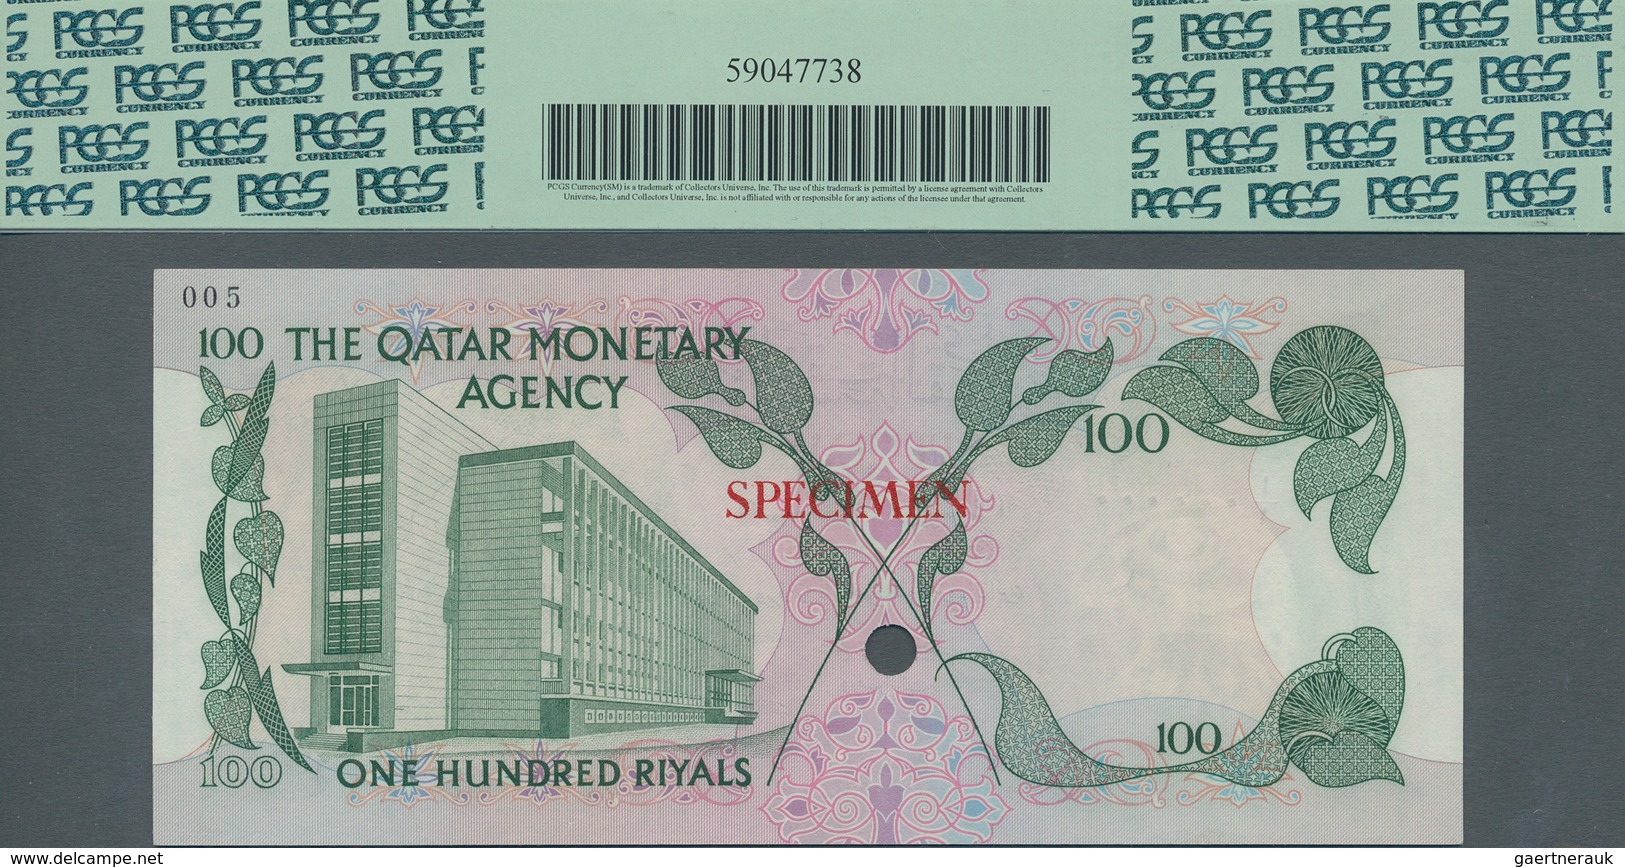 Qatar: Monetary Agency 100 Riyals ND(1973) Color Trial SPECIMEN, P.5cts With Punch Hole Cancellation - Qatar